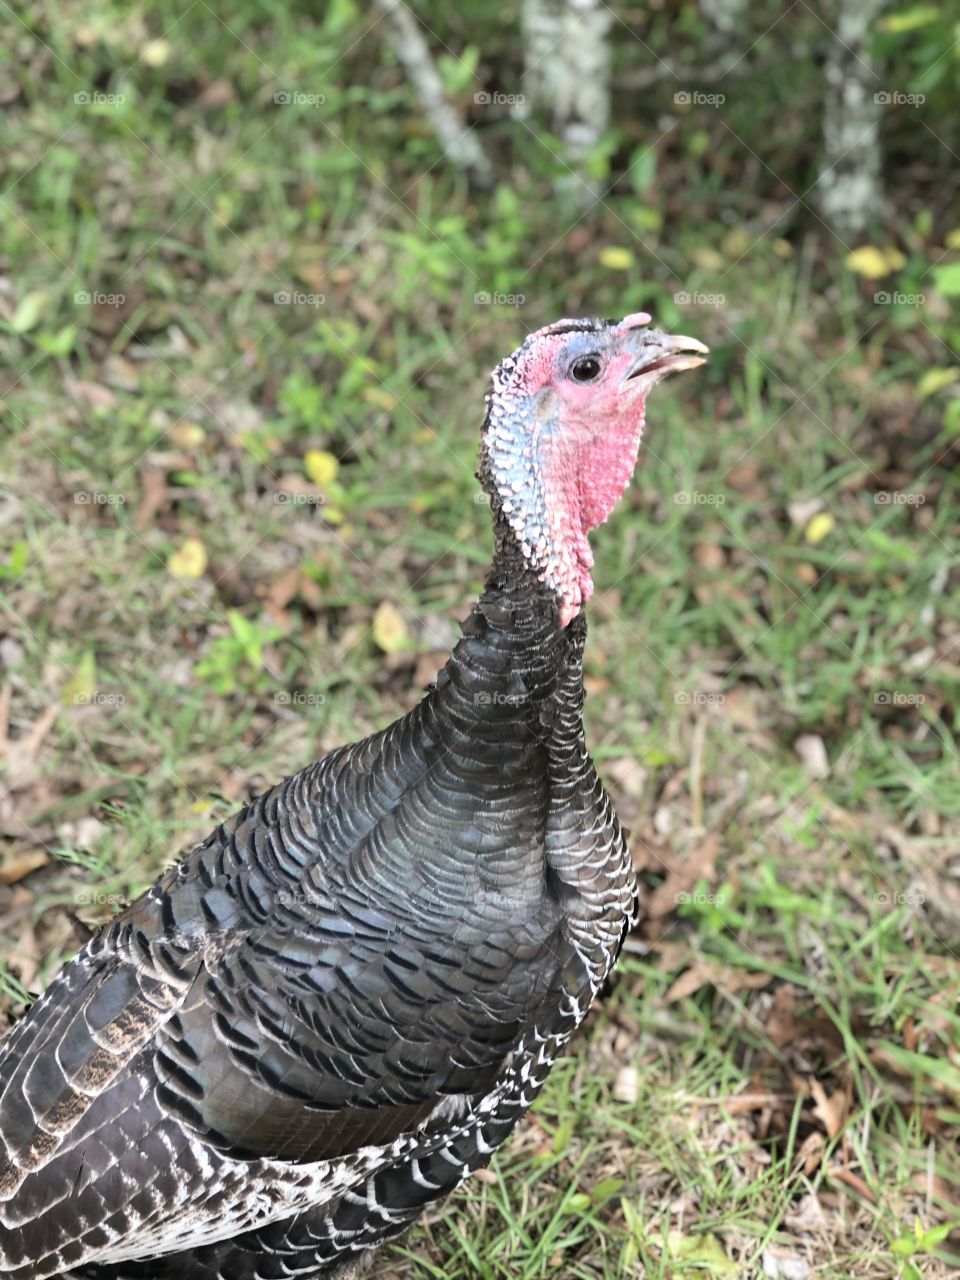 Isn’t he beautiful caught my neighbors turkey in my back yard ...